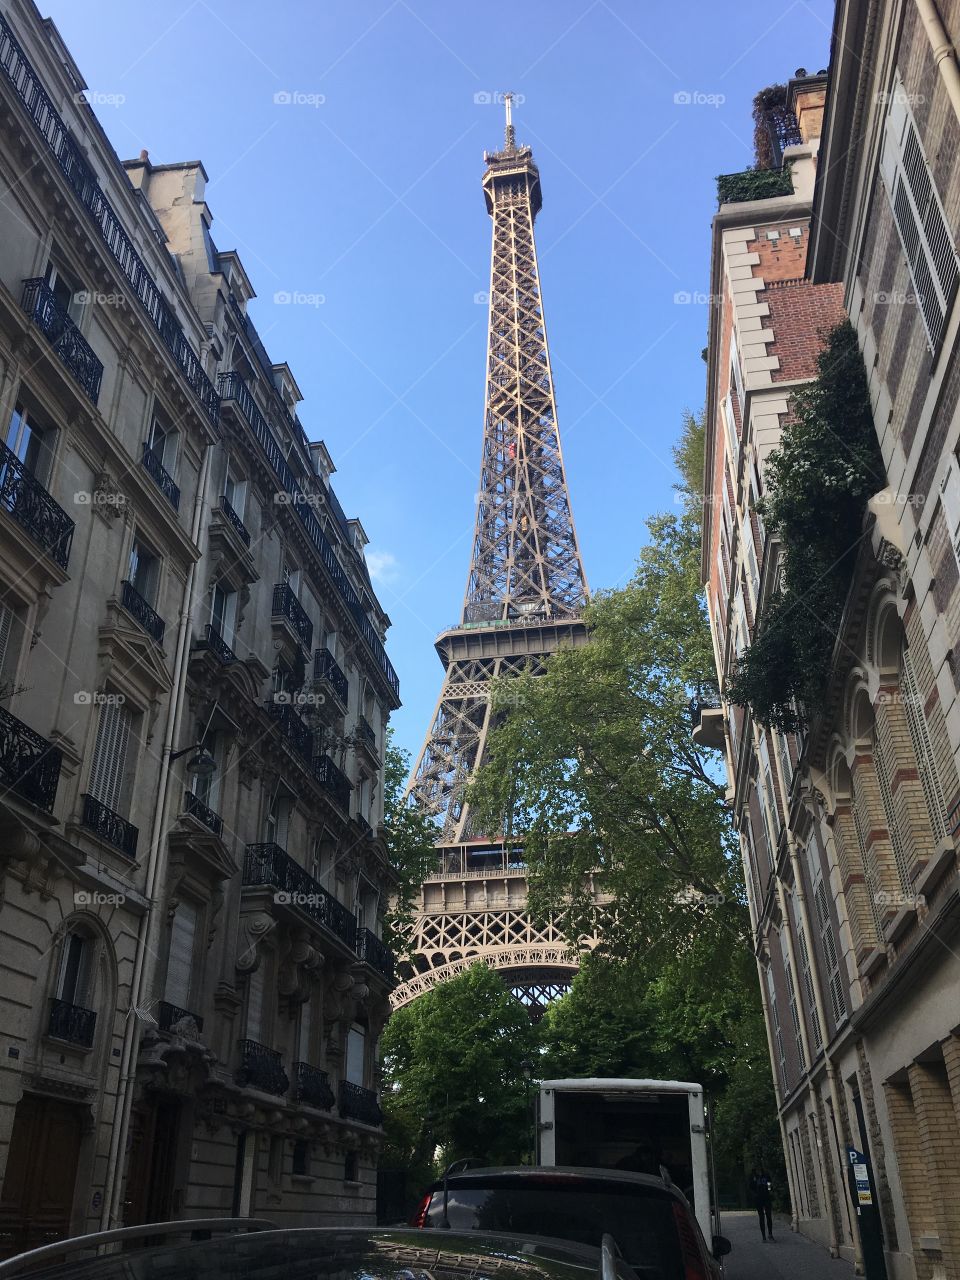 The Eiffel Tower seen through the city
